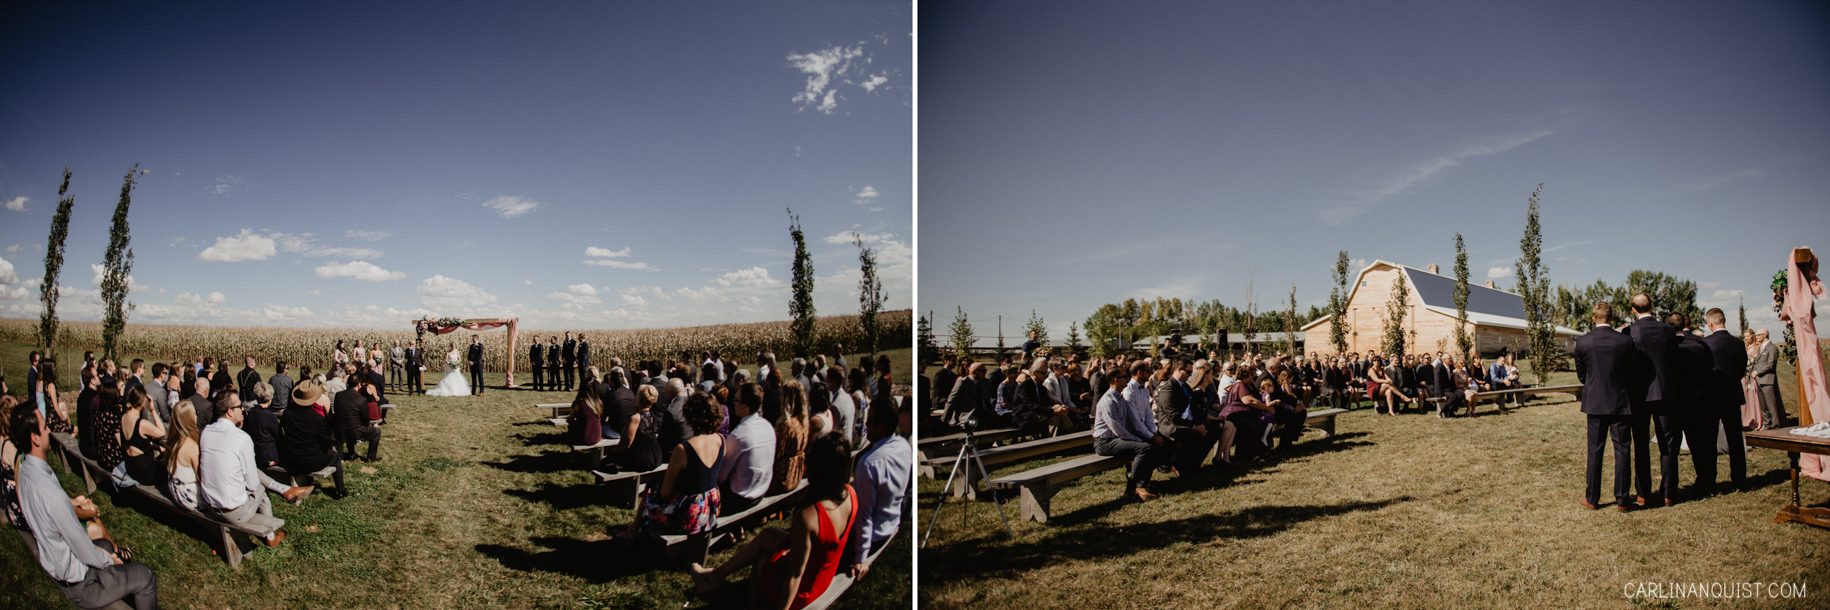 Wedding Ceremony | Willow Lane Barn Wedding Photos